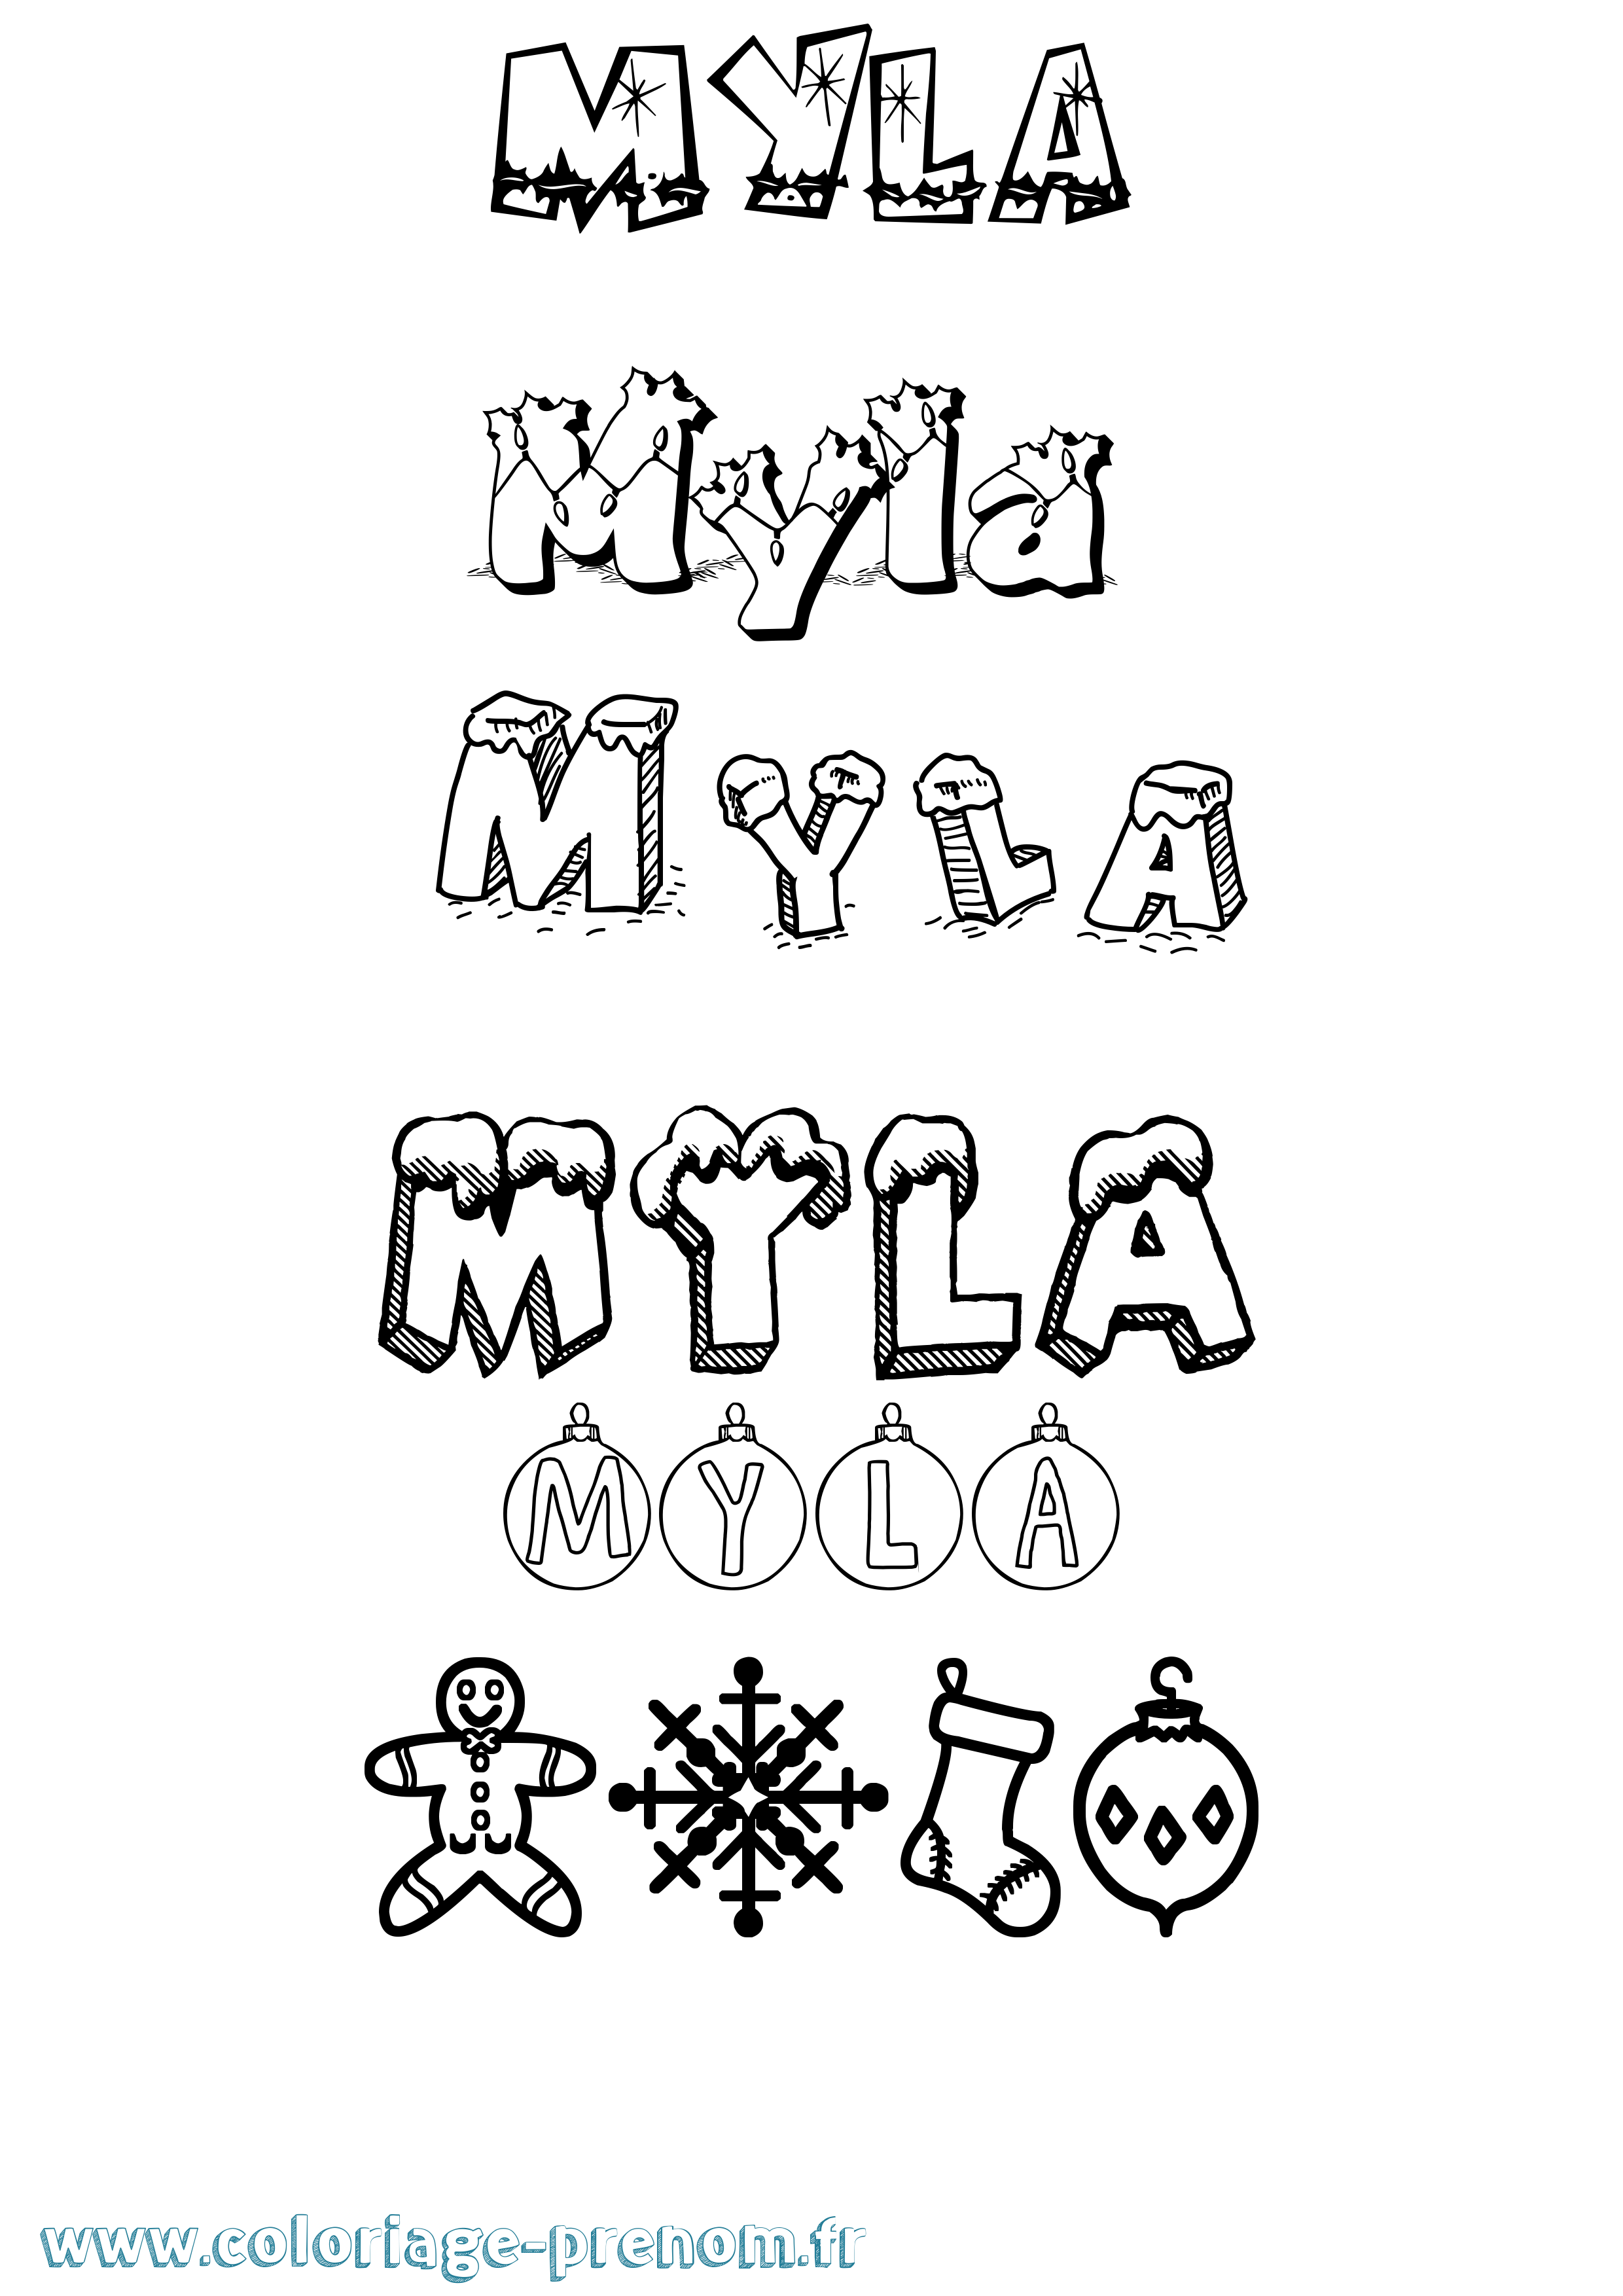 Coloriage prénom Myla